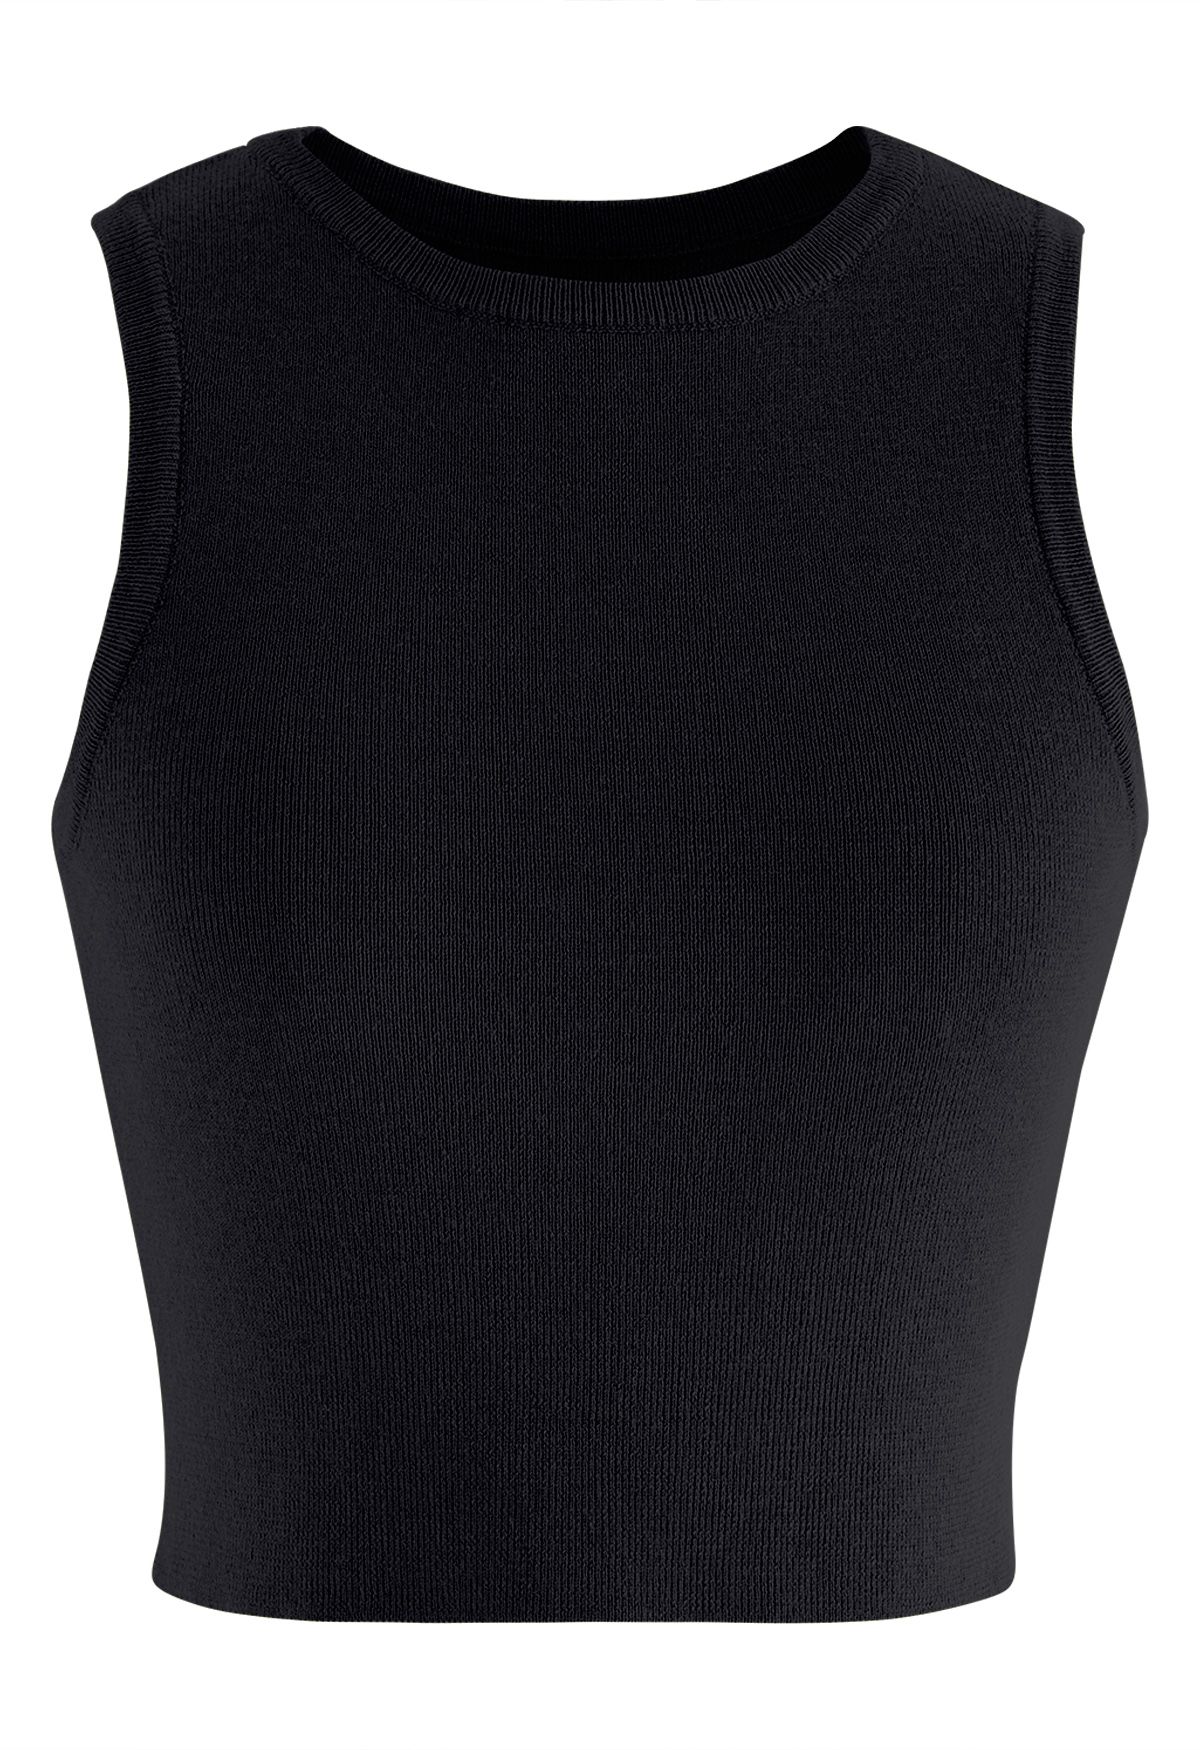 Camiseta sin mangas de punto Lithesome Comfort en negro